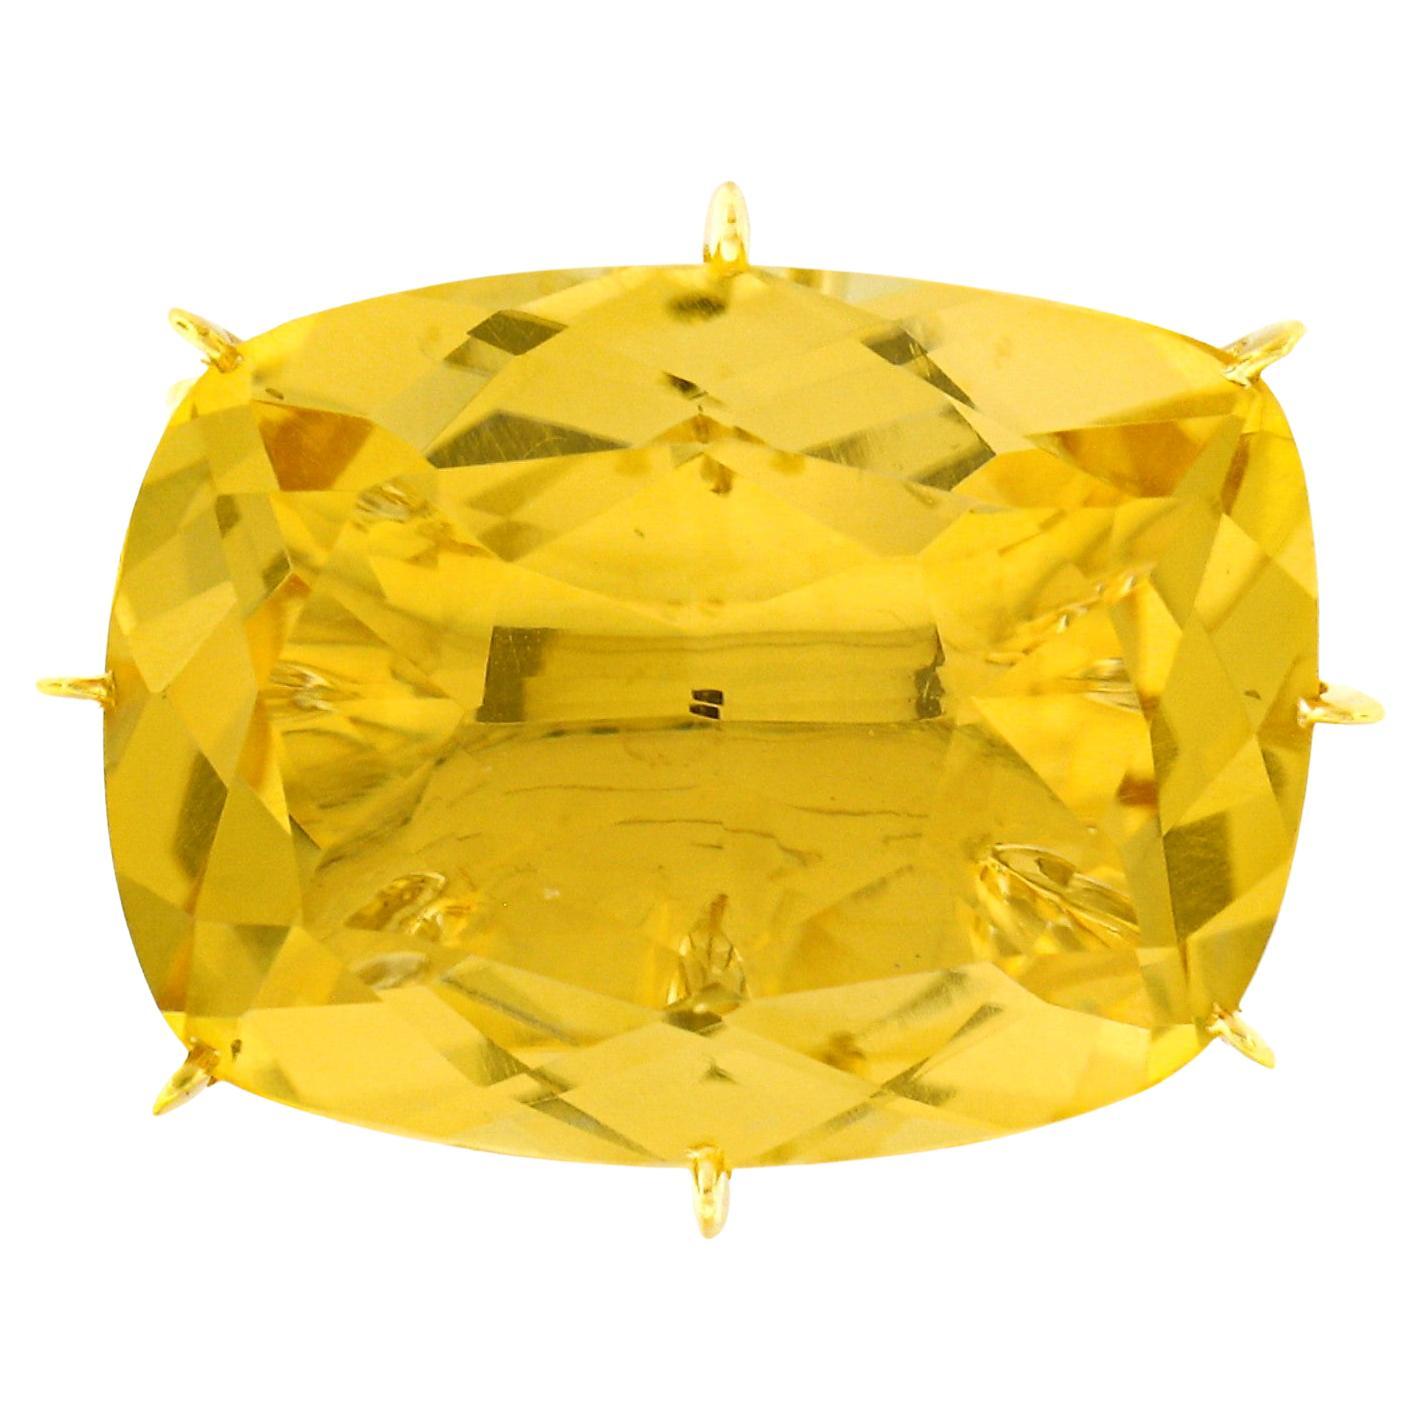 H. Stern 18k Gold Cushion Citrine Solitaire 7 Diamond Sunrise Cocktail Ring